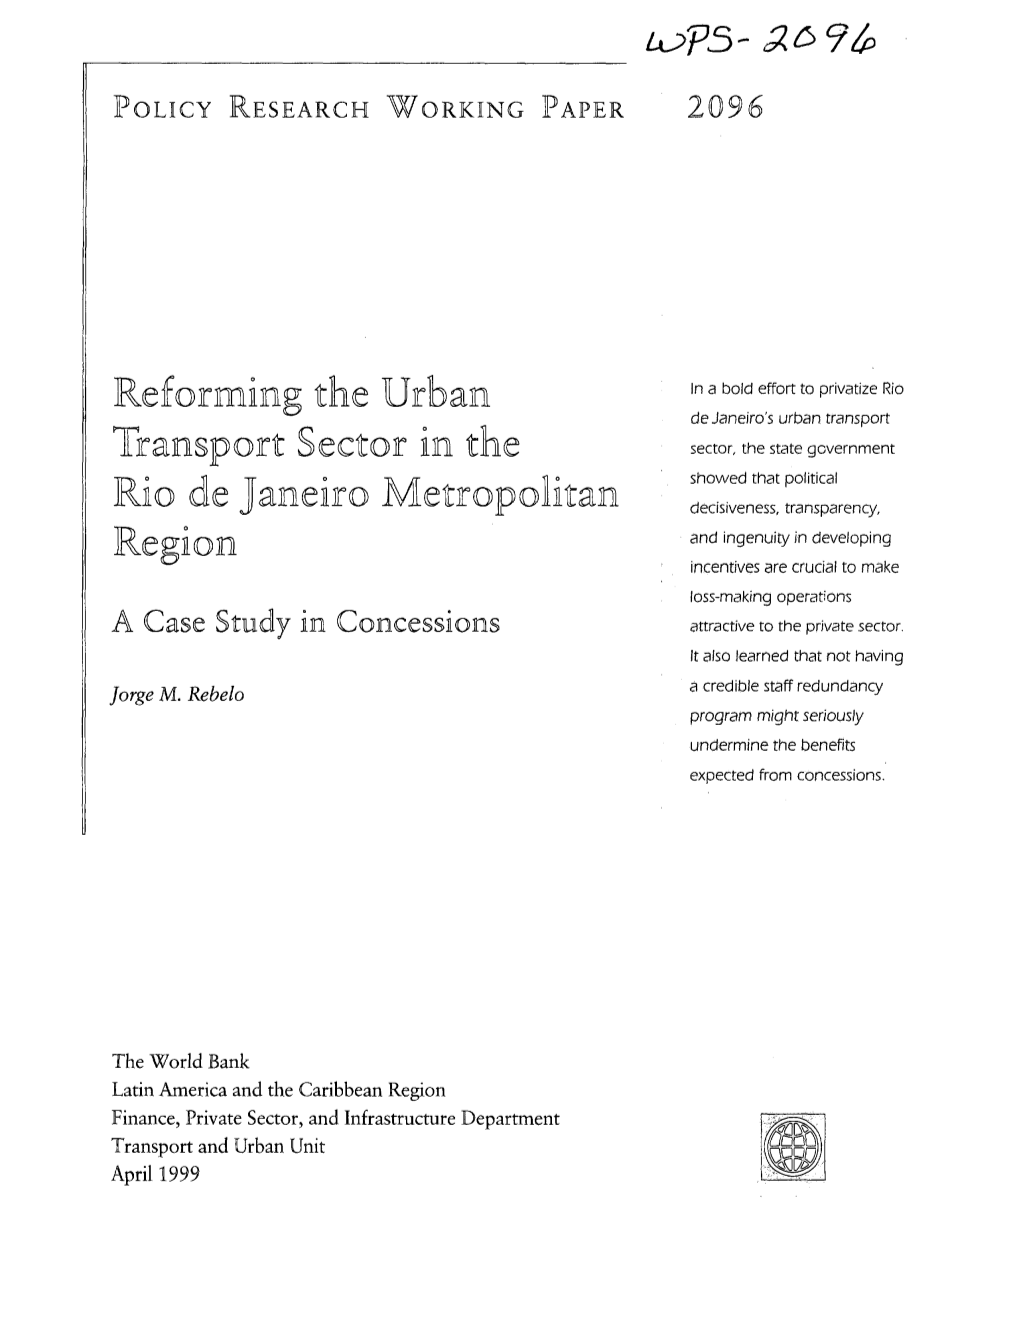 Reforming the Urban Transport Sector in the Rio De Janeiro Metropolitan Region